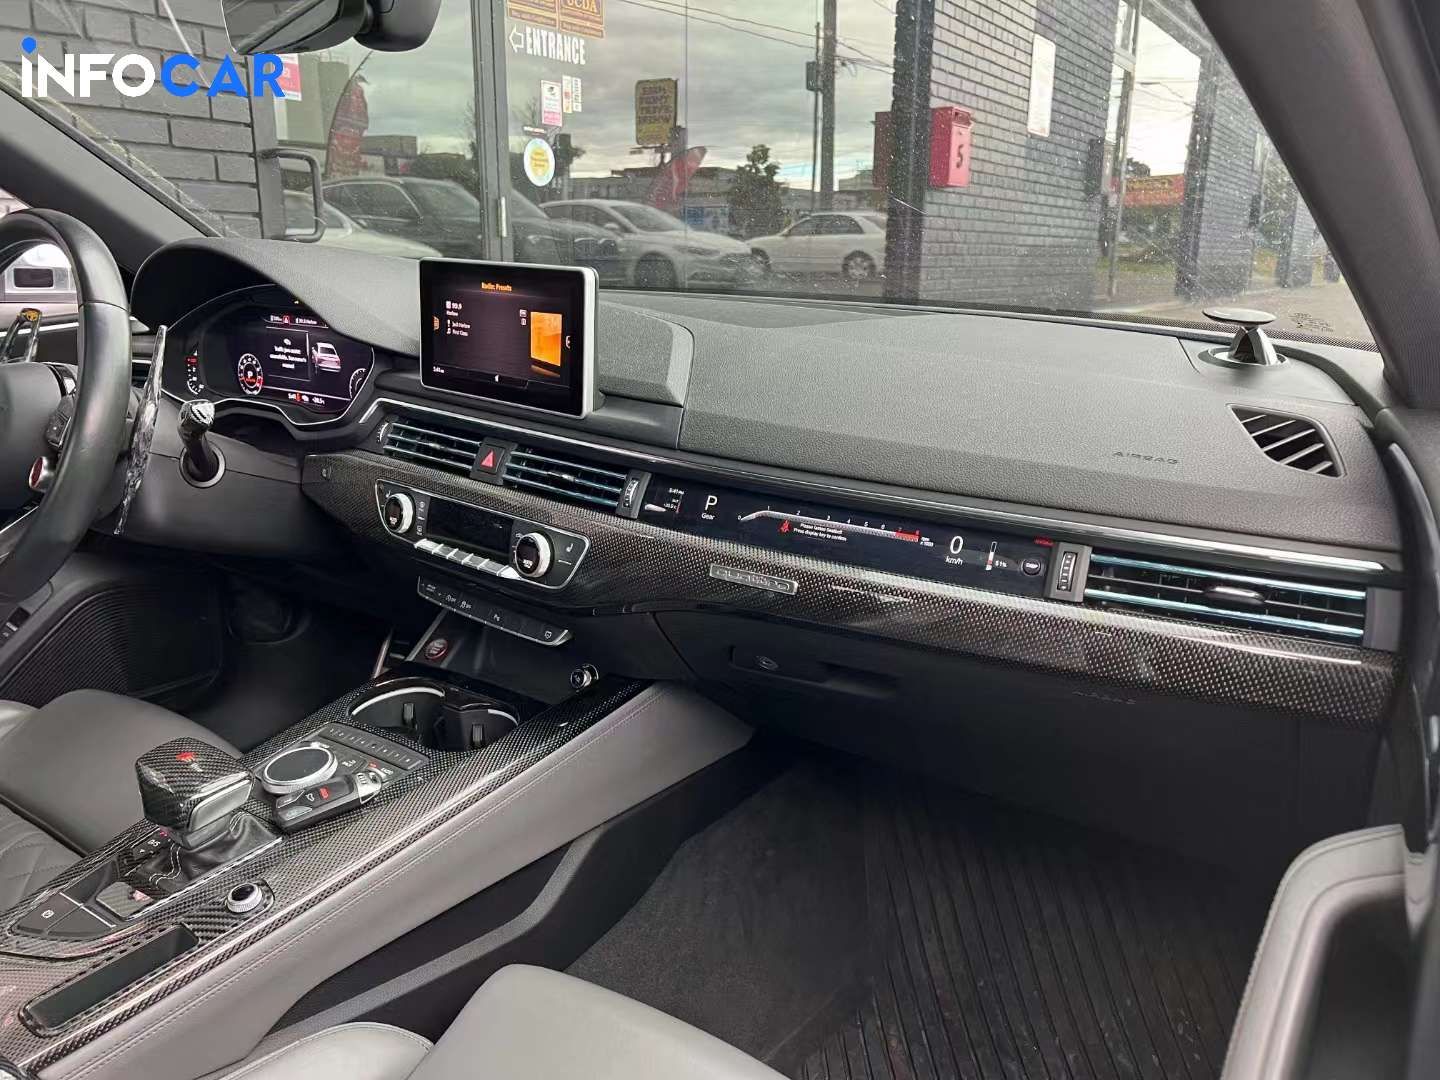 2018 Audi S4 null - INFOCAR - Toronto Auto Trading Platform